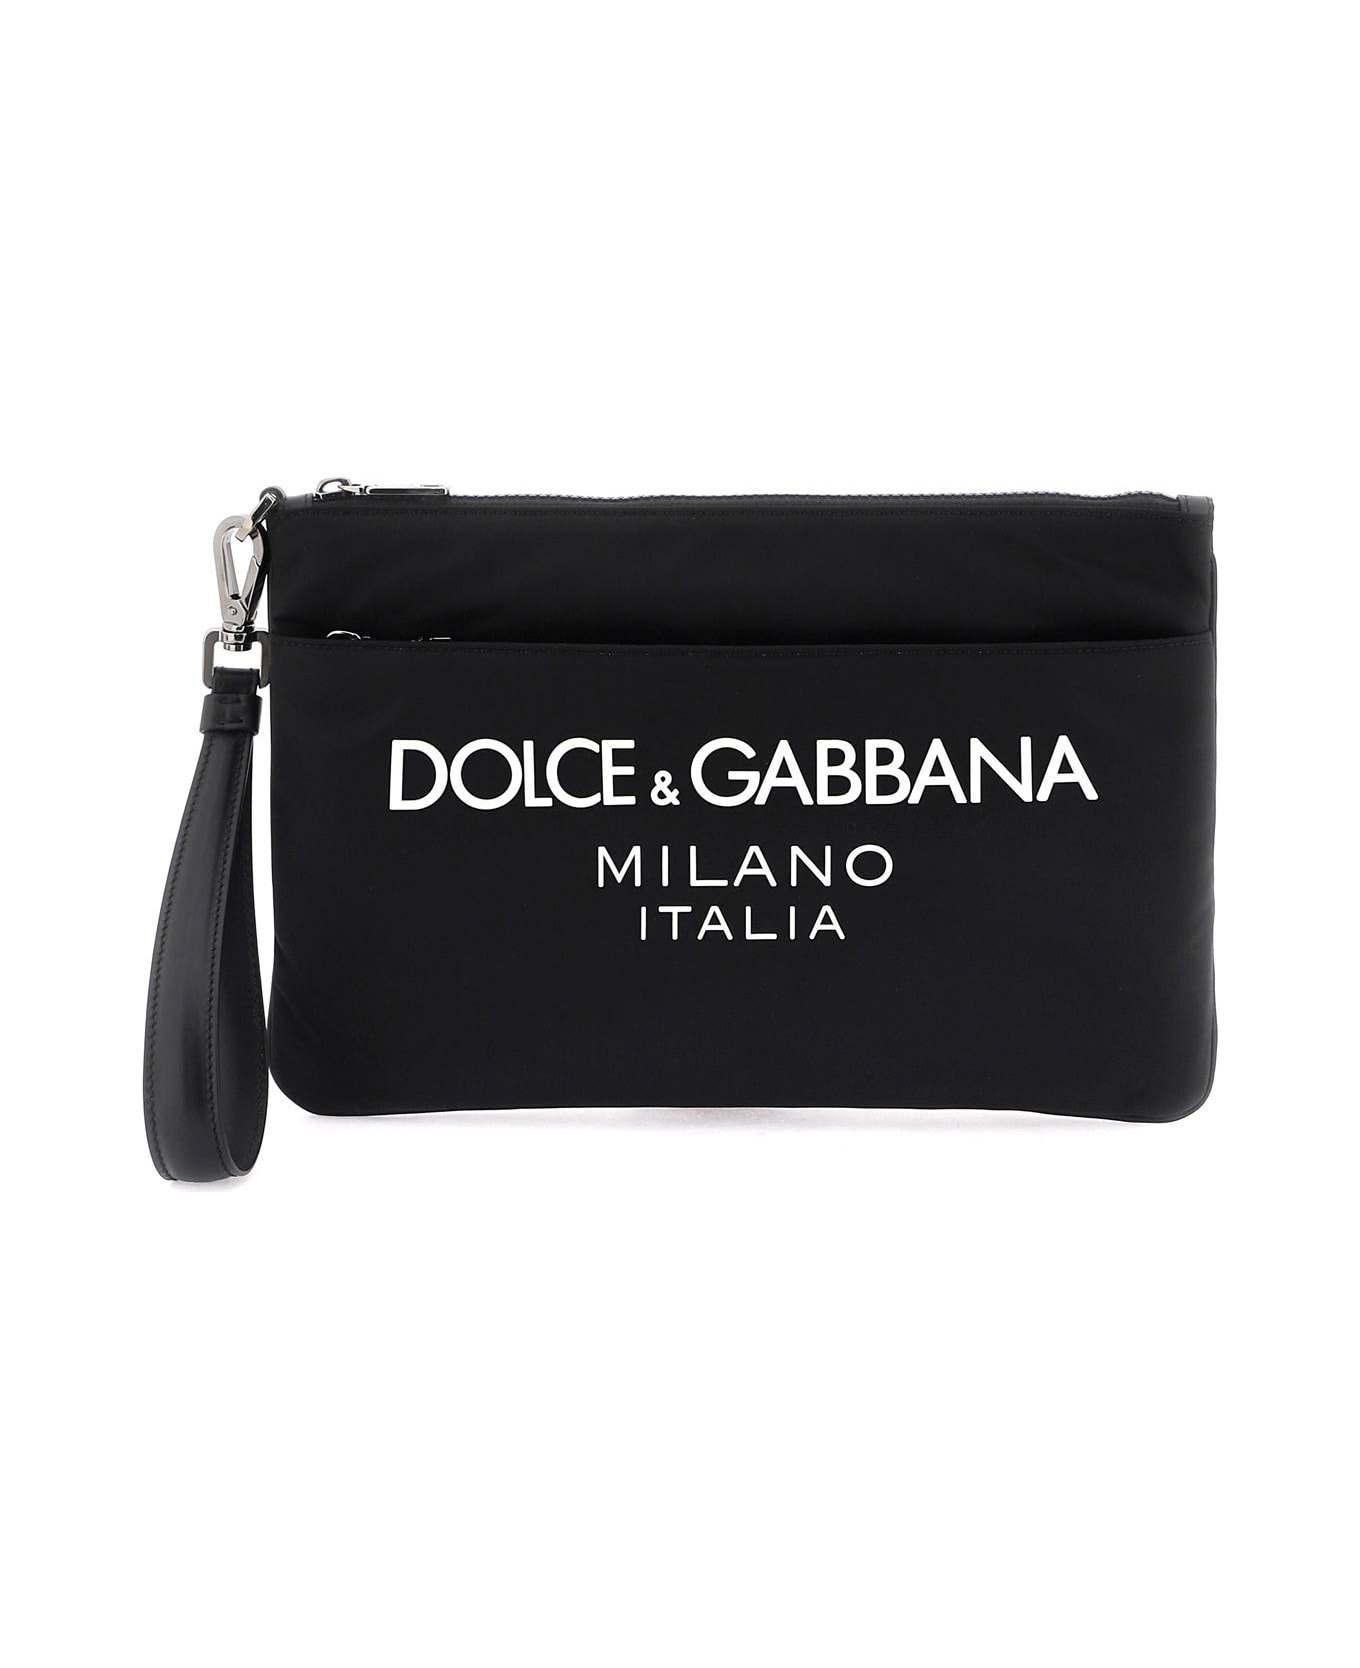 Dolce & Gabbana Beauty Case - Nero/nero バッグ